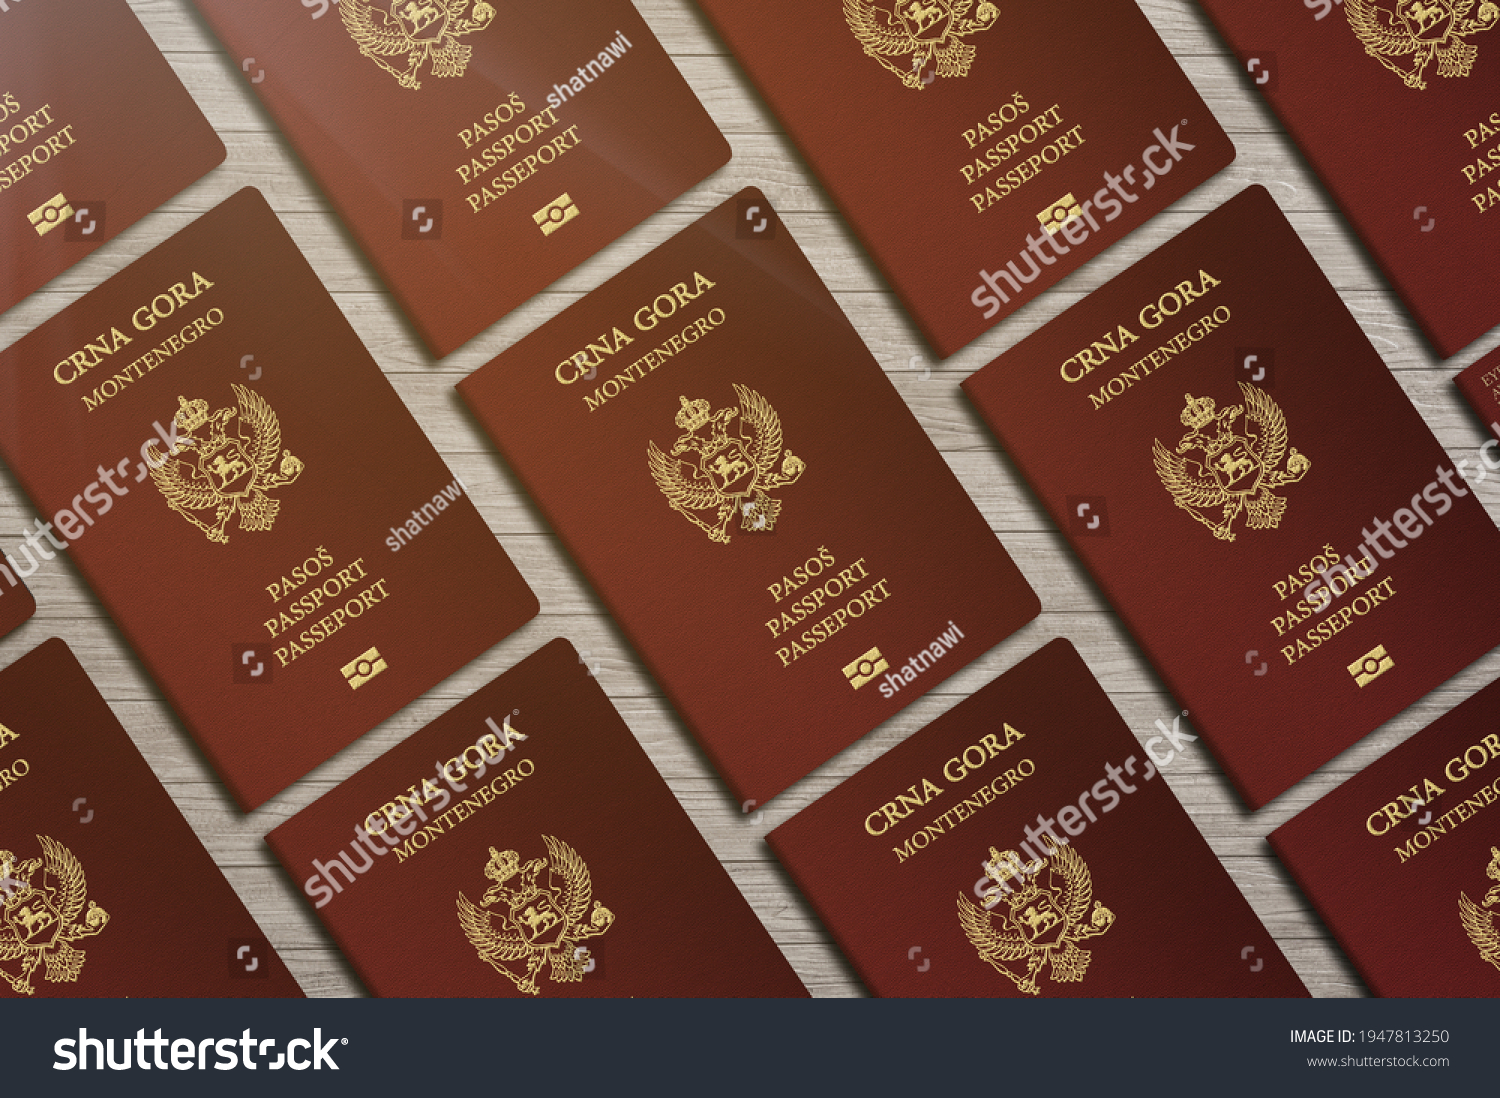 Skillful Becks Phonetics Passports European Union Montenegro Top View Stock Illustration 1947813250  | Shutterstock